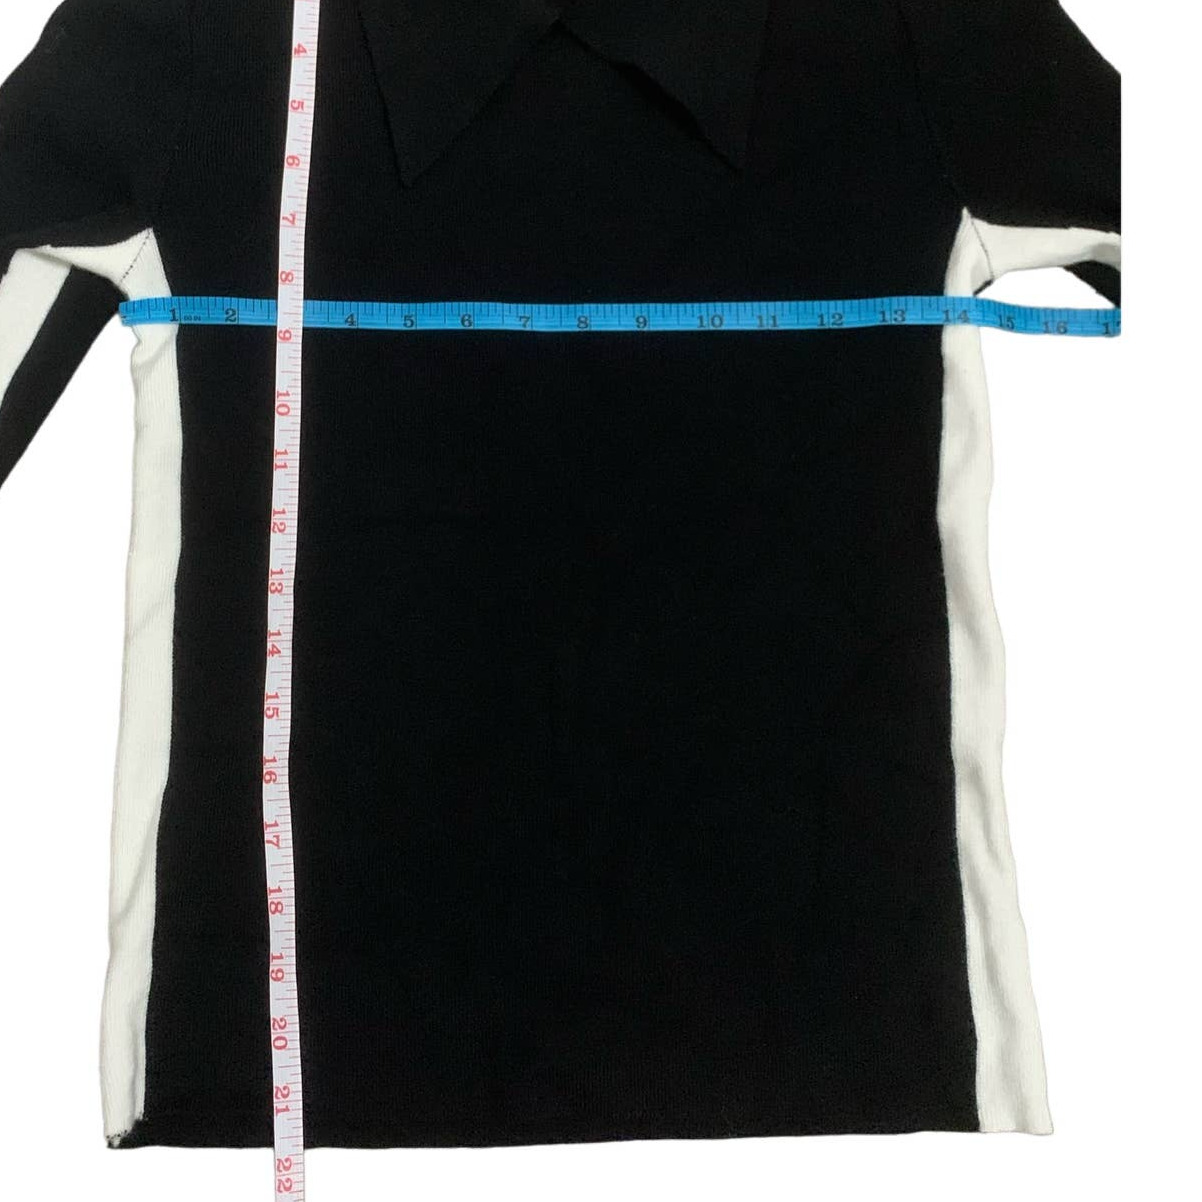 Ribbed Black & White Striped Crop Top Sweatshirt - image 3